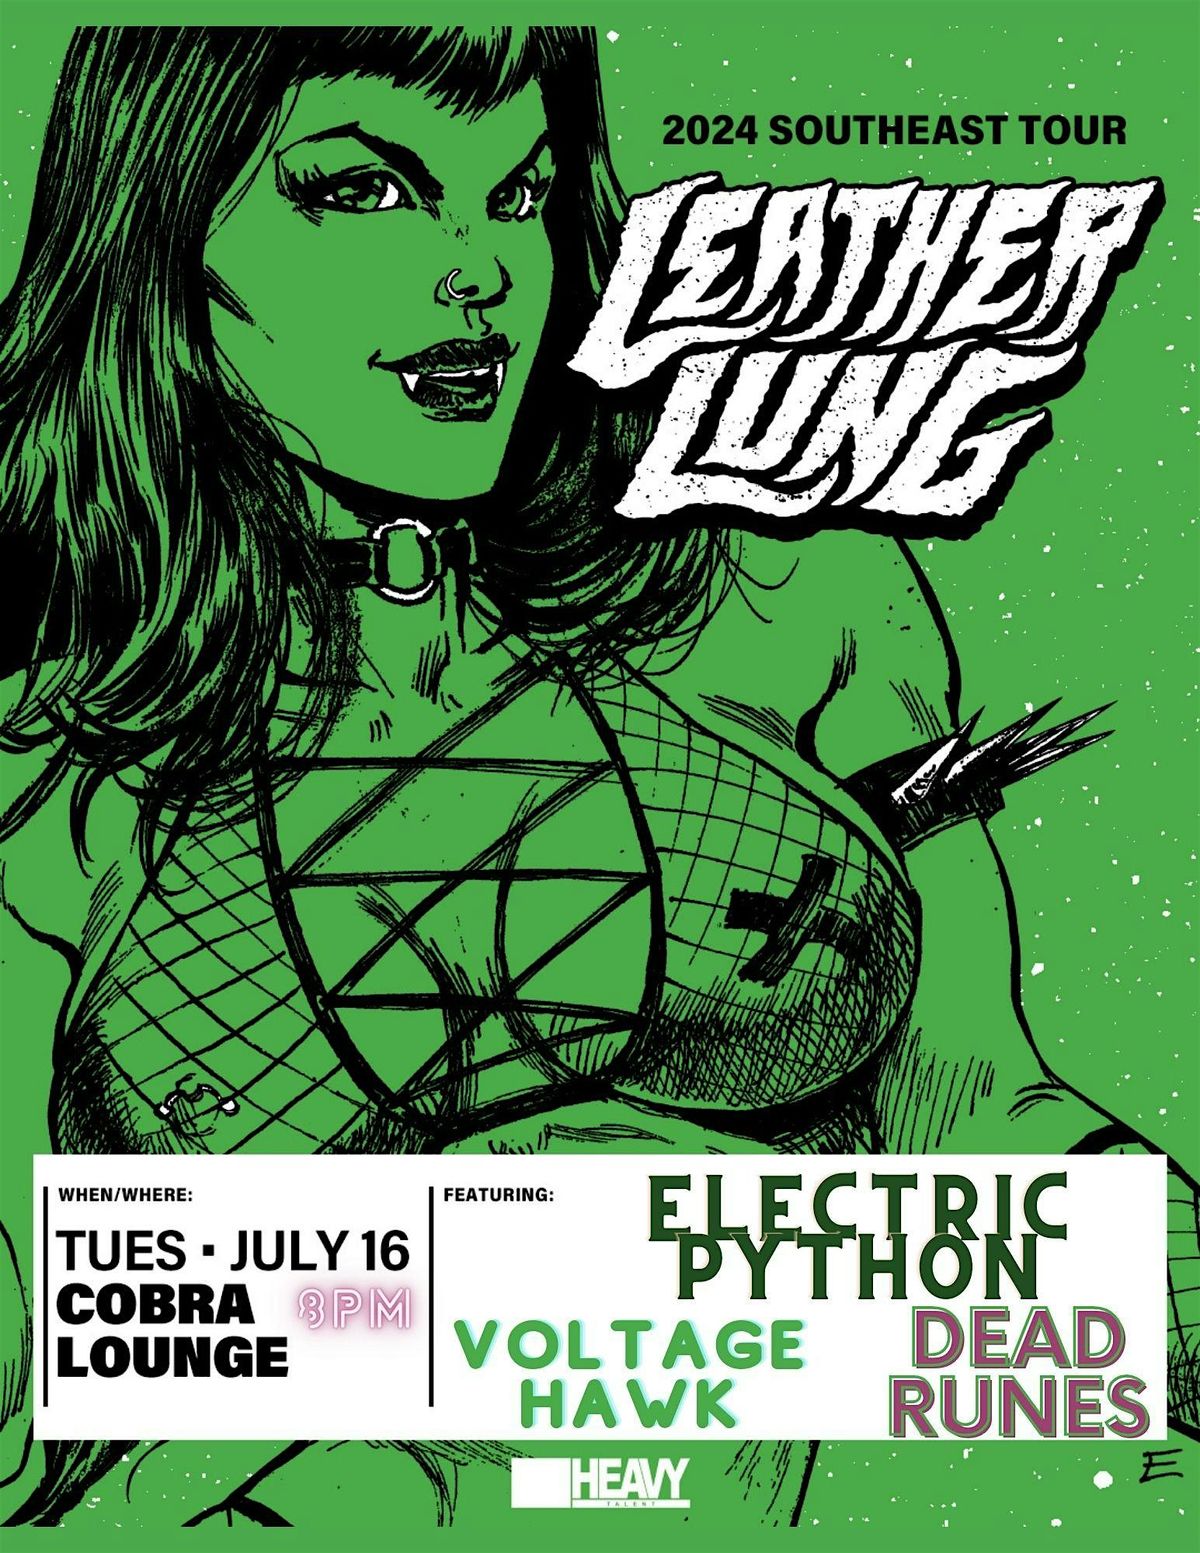 Leather Lung | Electric Python | Voltage Hawk | Dead Runes